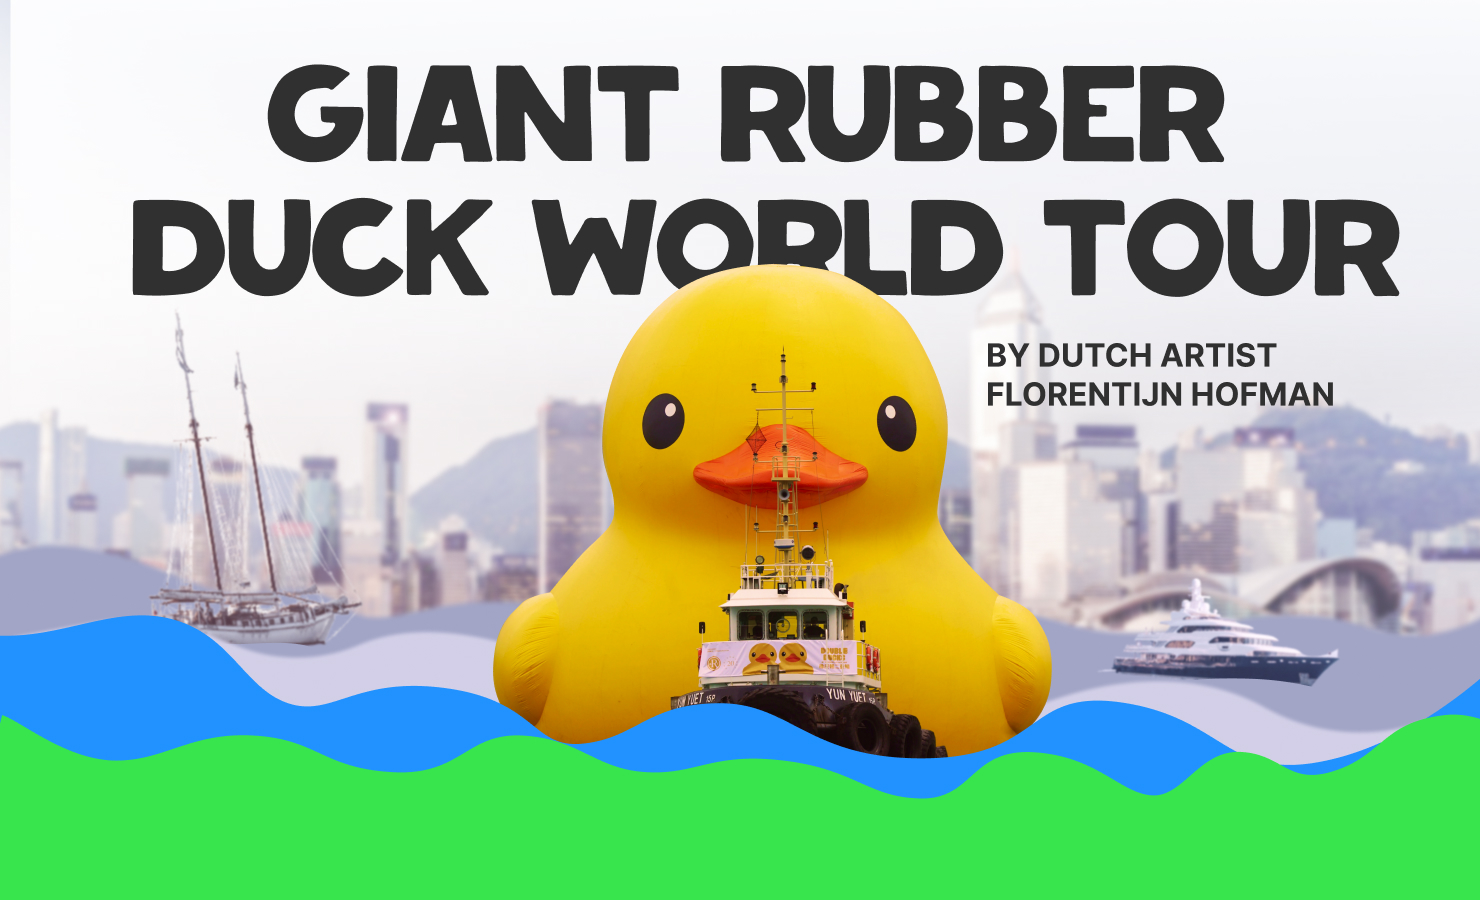 Giant rubber duck world tour